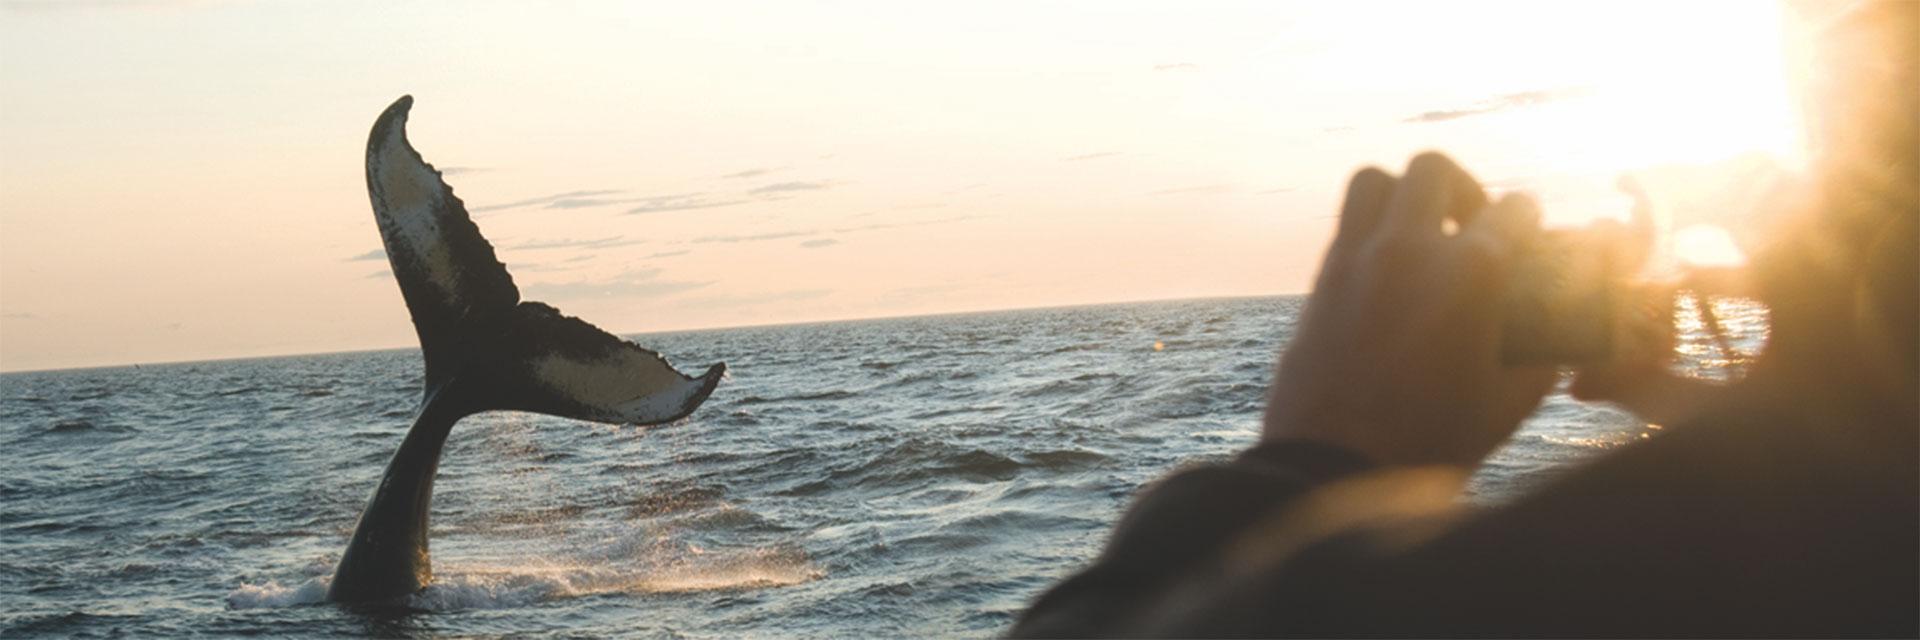 Whale Watching in Nova Scotia 